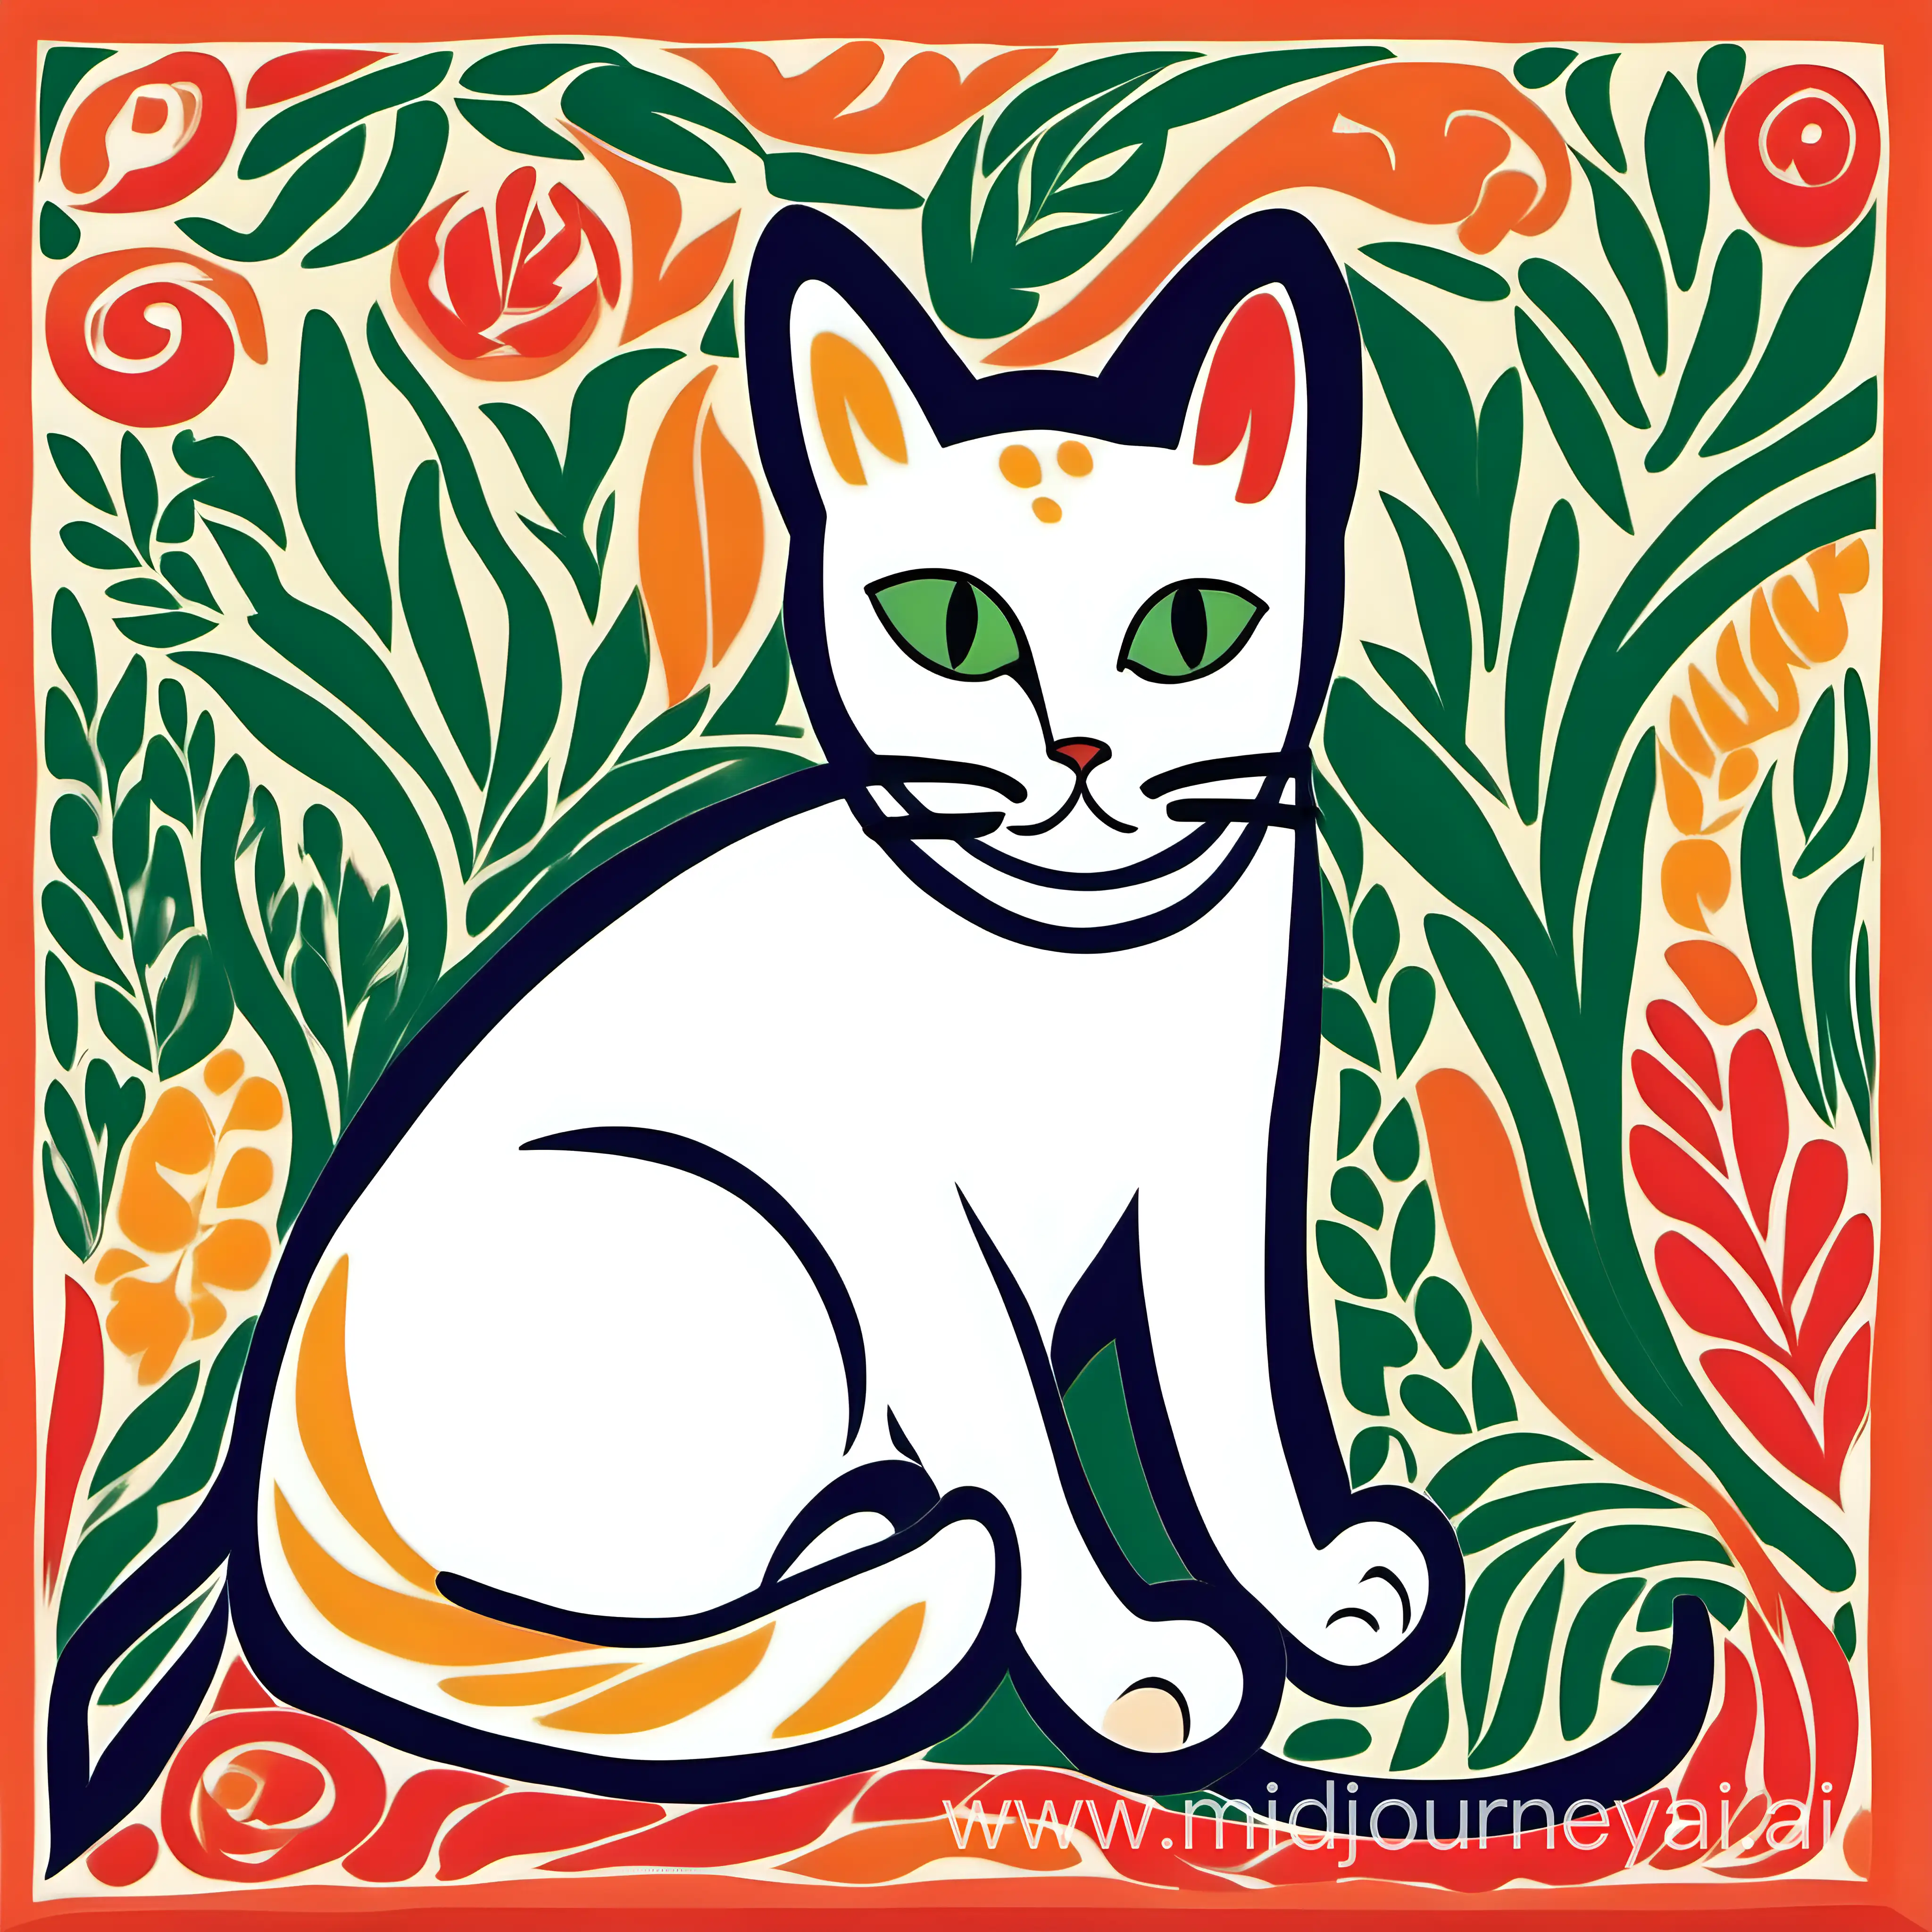 NeoImpressionist Cat Illustration in the Style of Henri Matisse